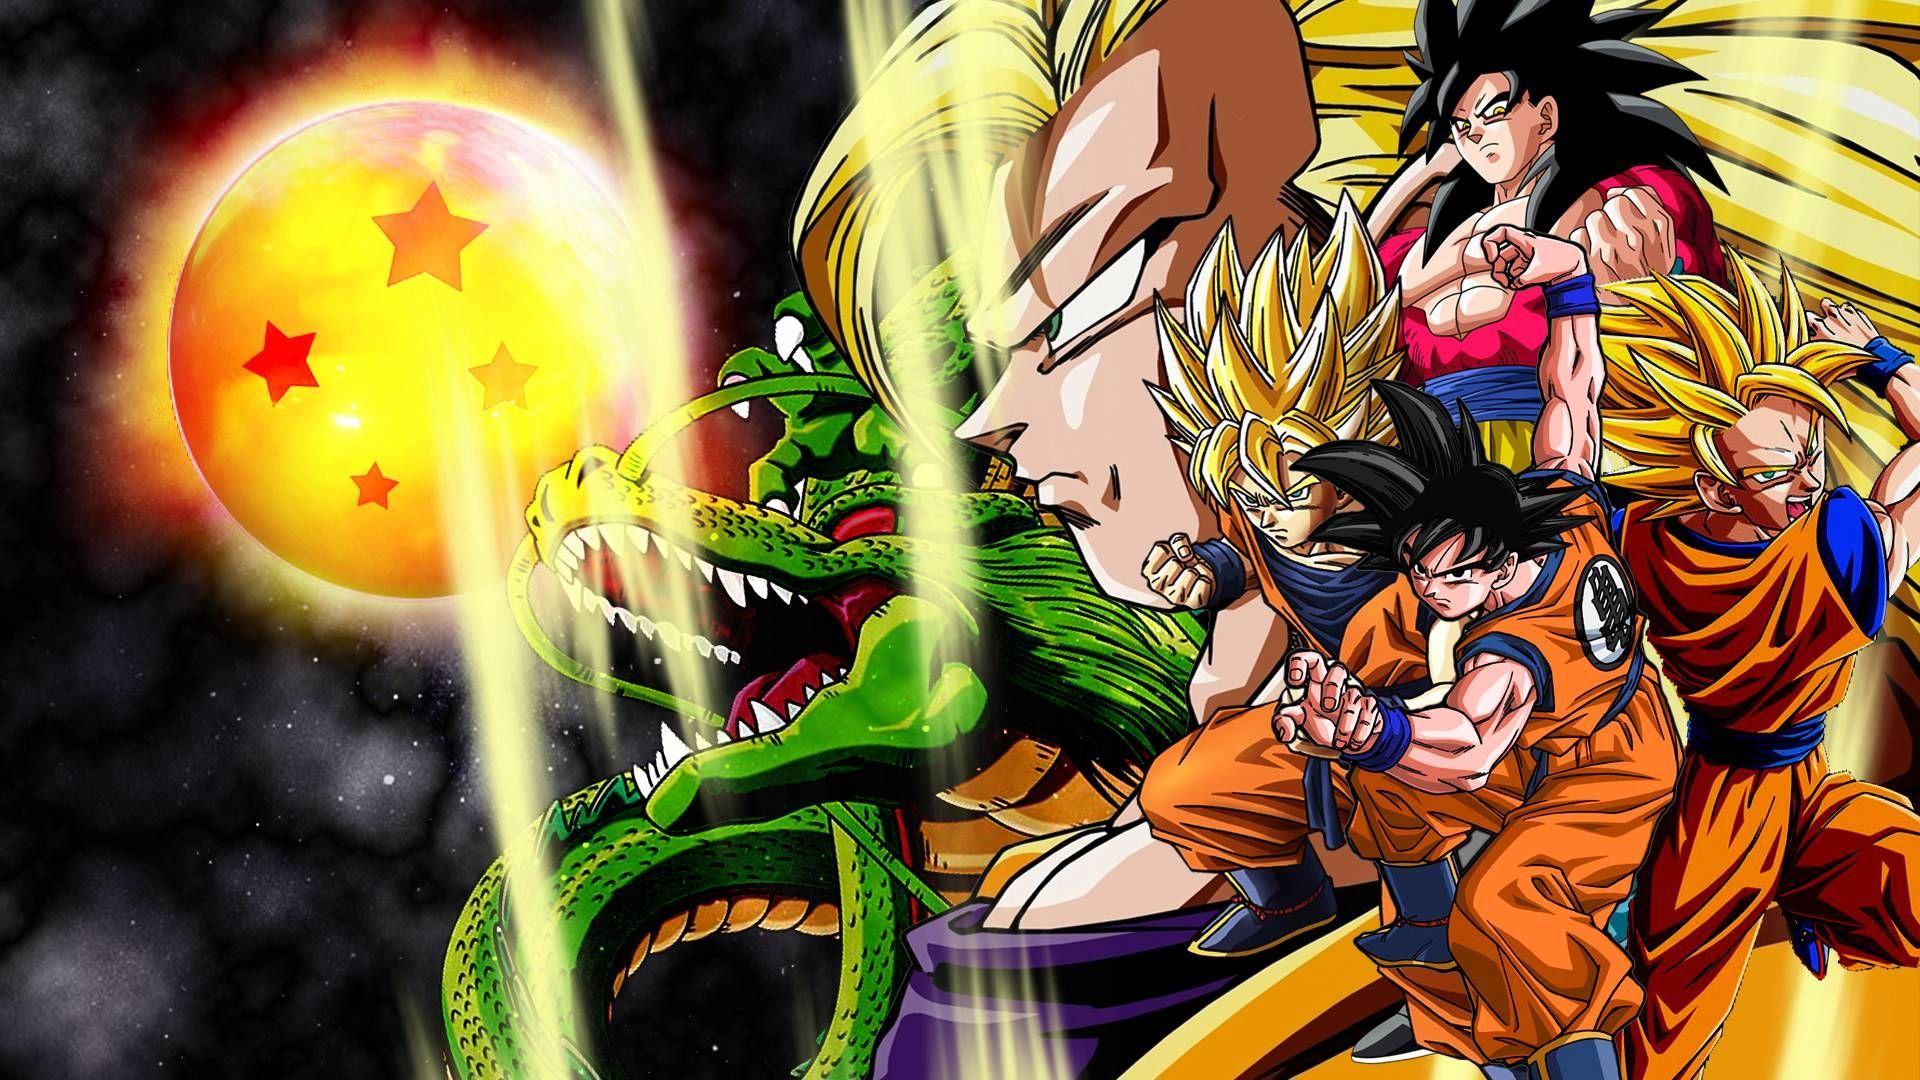 HD Goku Dragon Ball Z Background. Wallpaper, Background